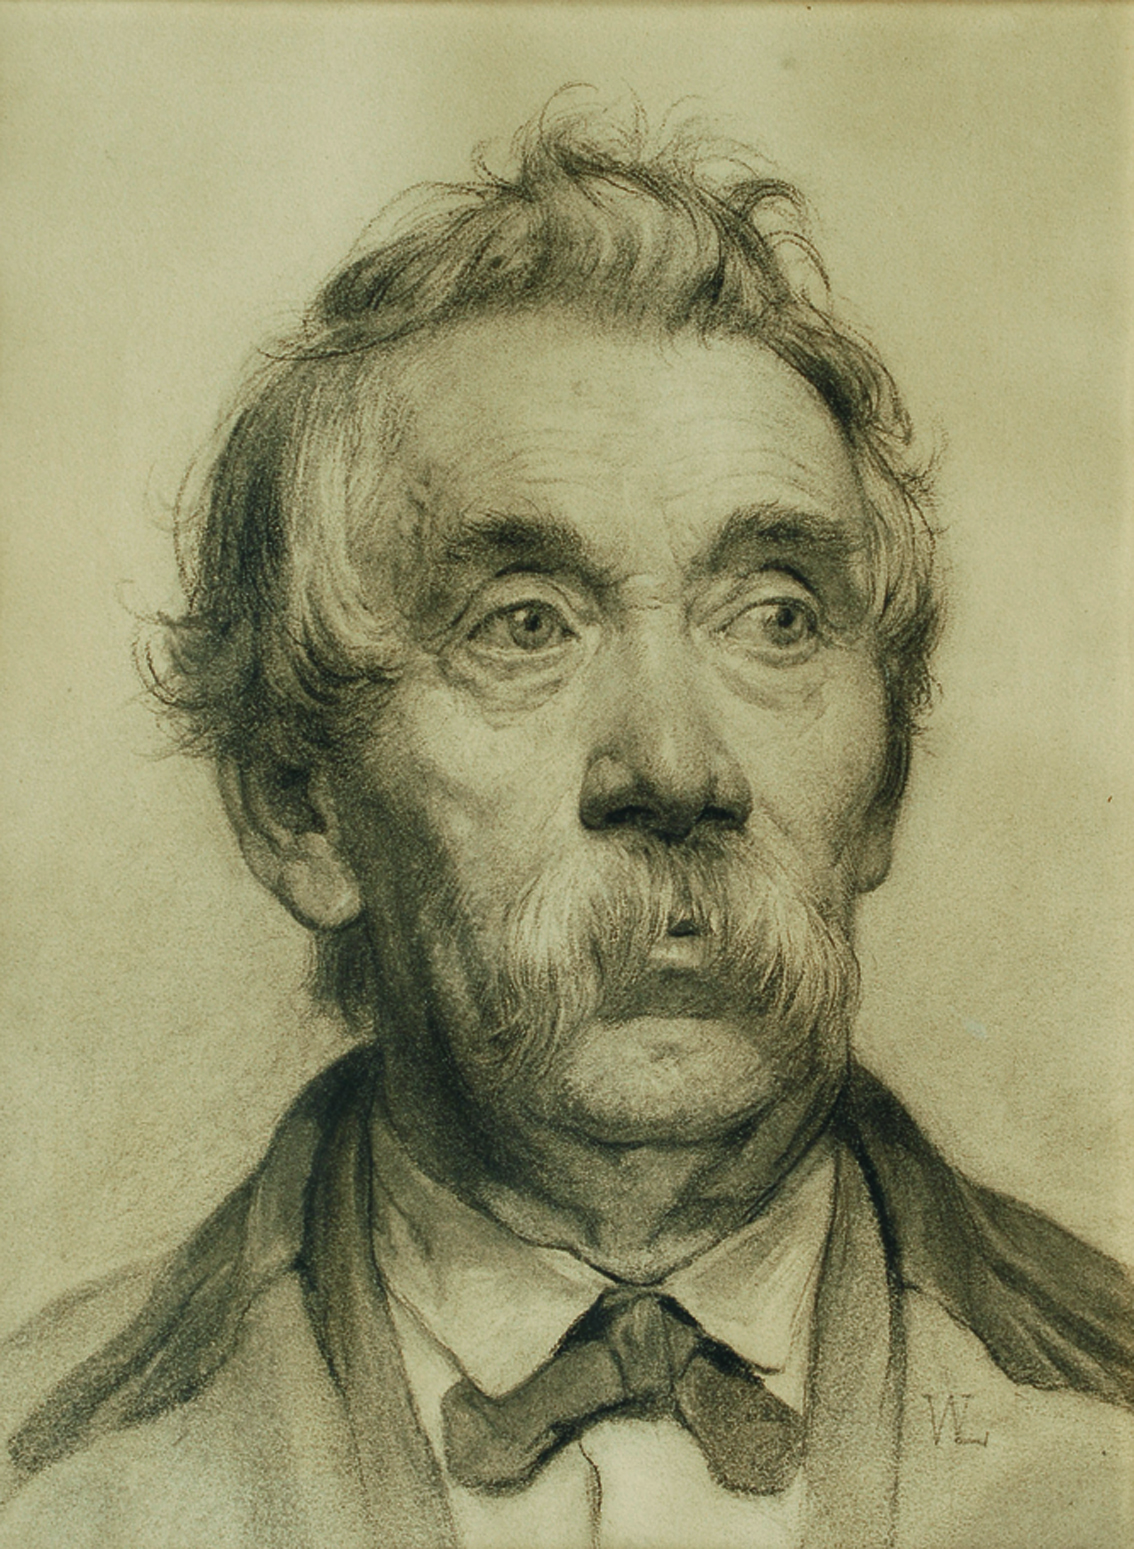 A portrait of a gentleman